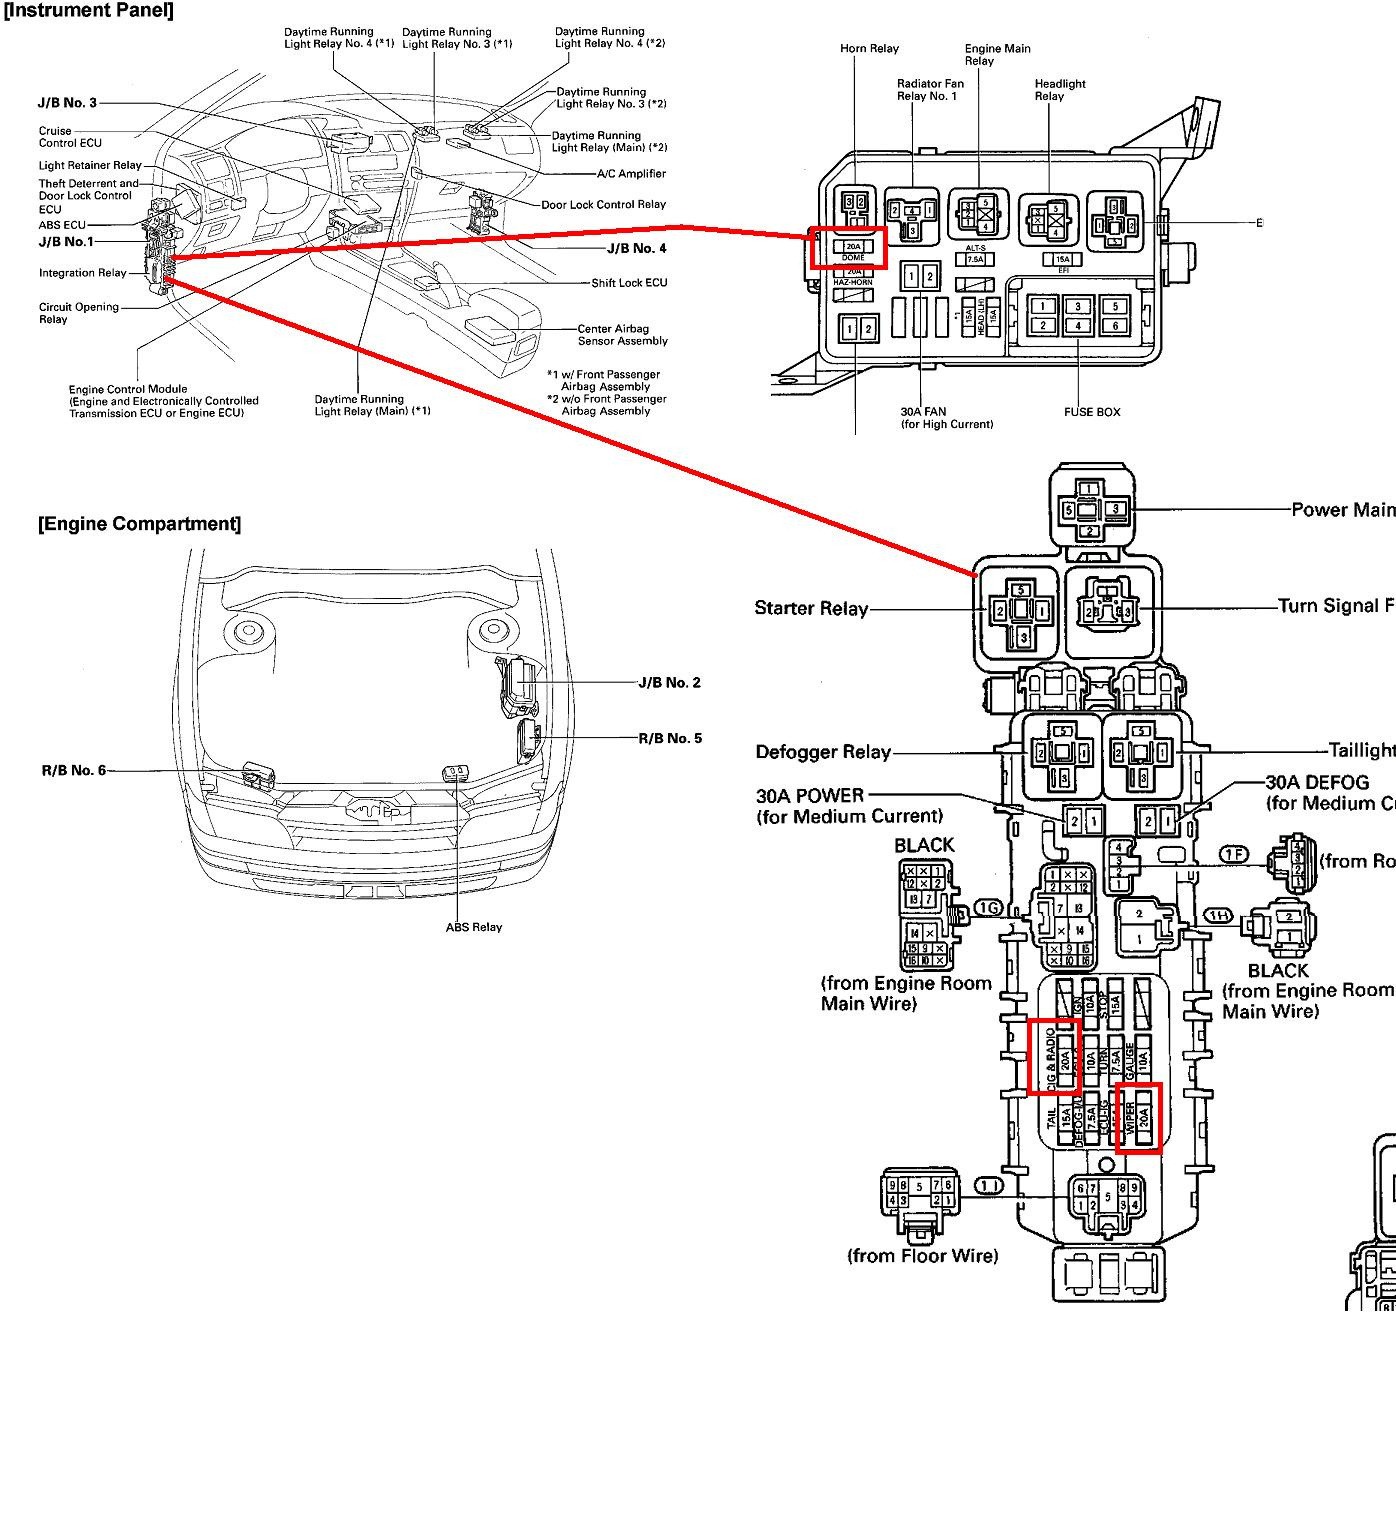 2005 toyota Sienna Engine Diagram 2005 toyota Corolla Alternator Wiring Diagram Wiring Diagram today Of 2005 toyota Sienna Engine Diagram